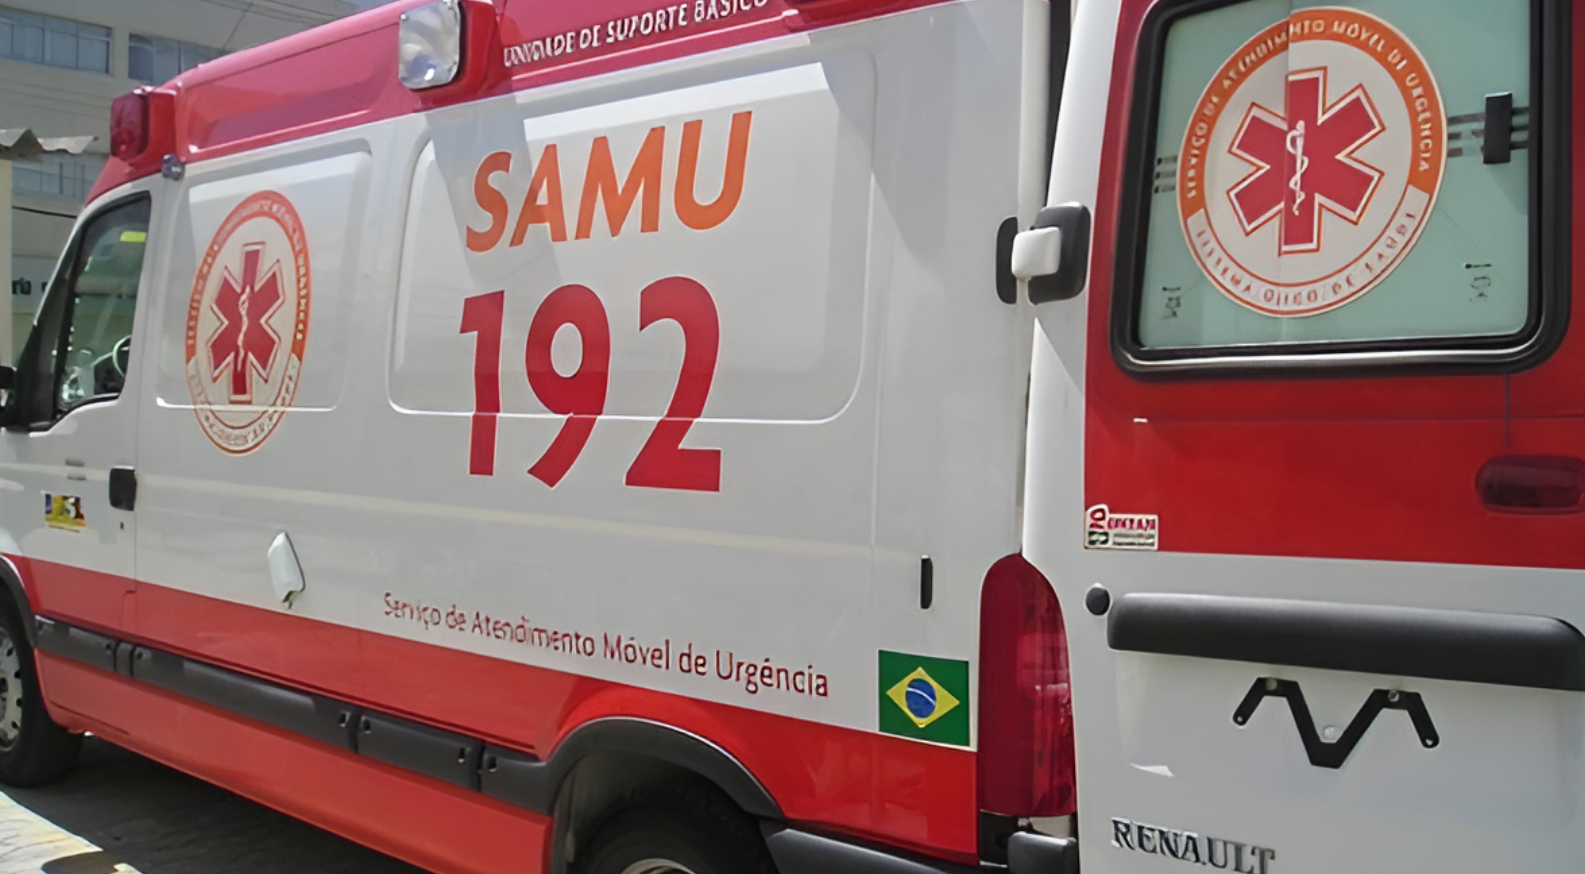 Ambulância-SAMU-Indaiatuba-Jornal Correio do Interior-Furta